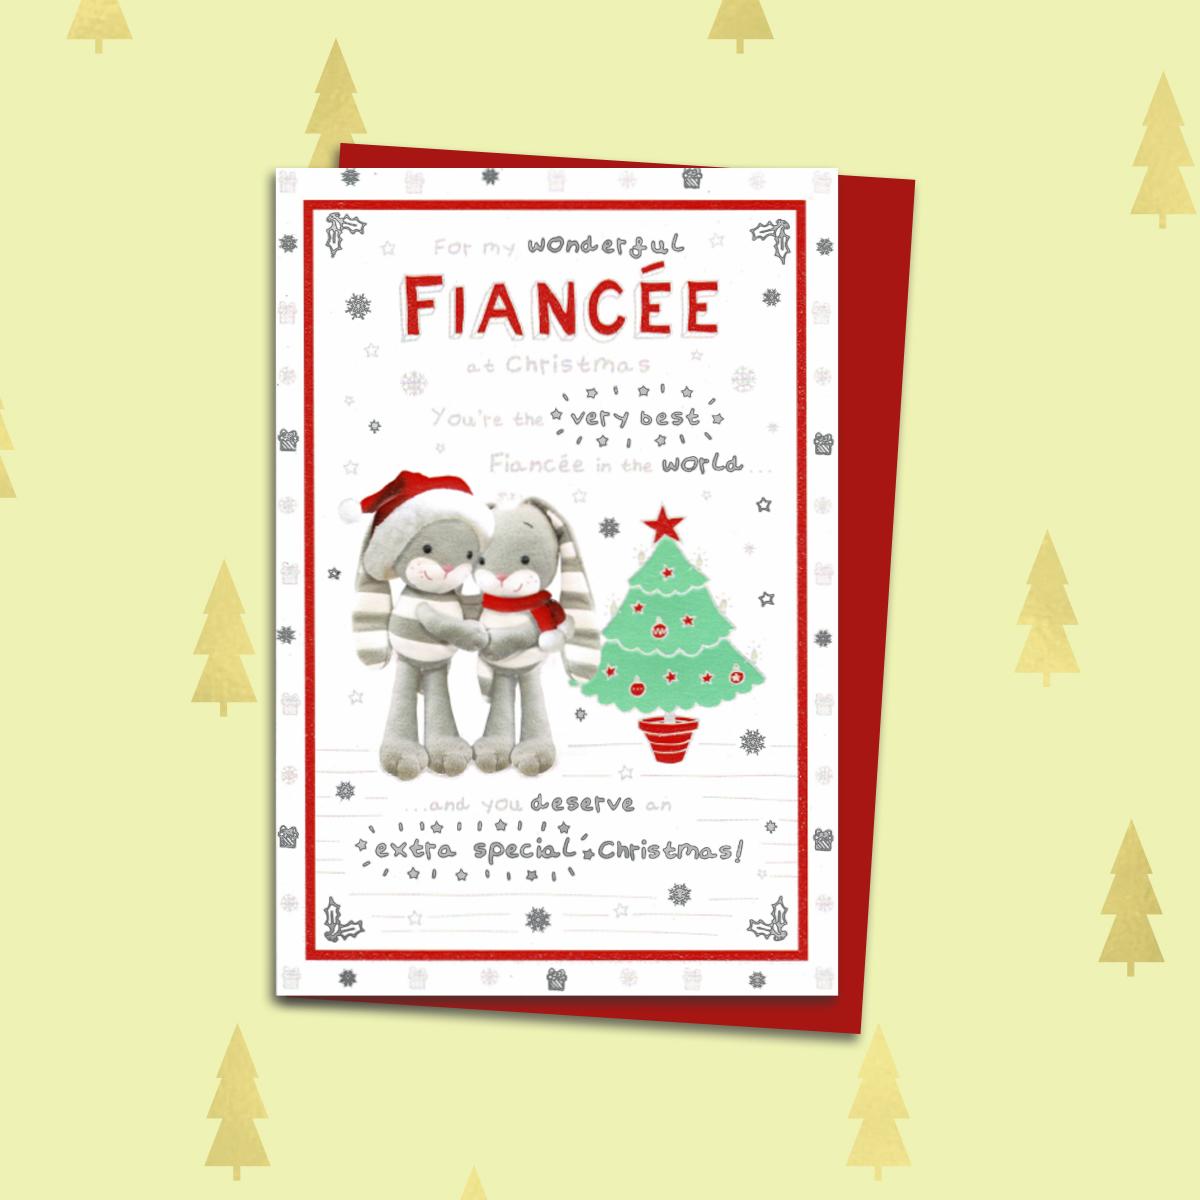 Fiancee Christmas Card Alongside Its Red Envelope